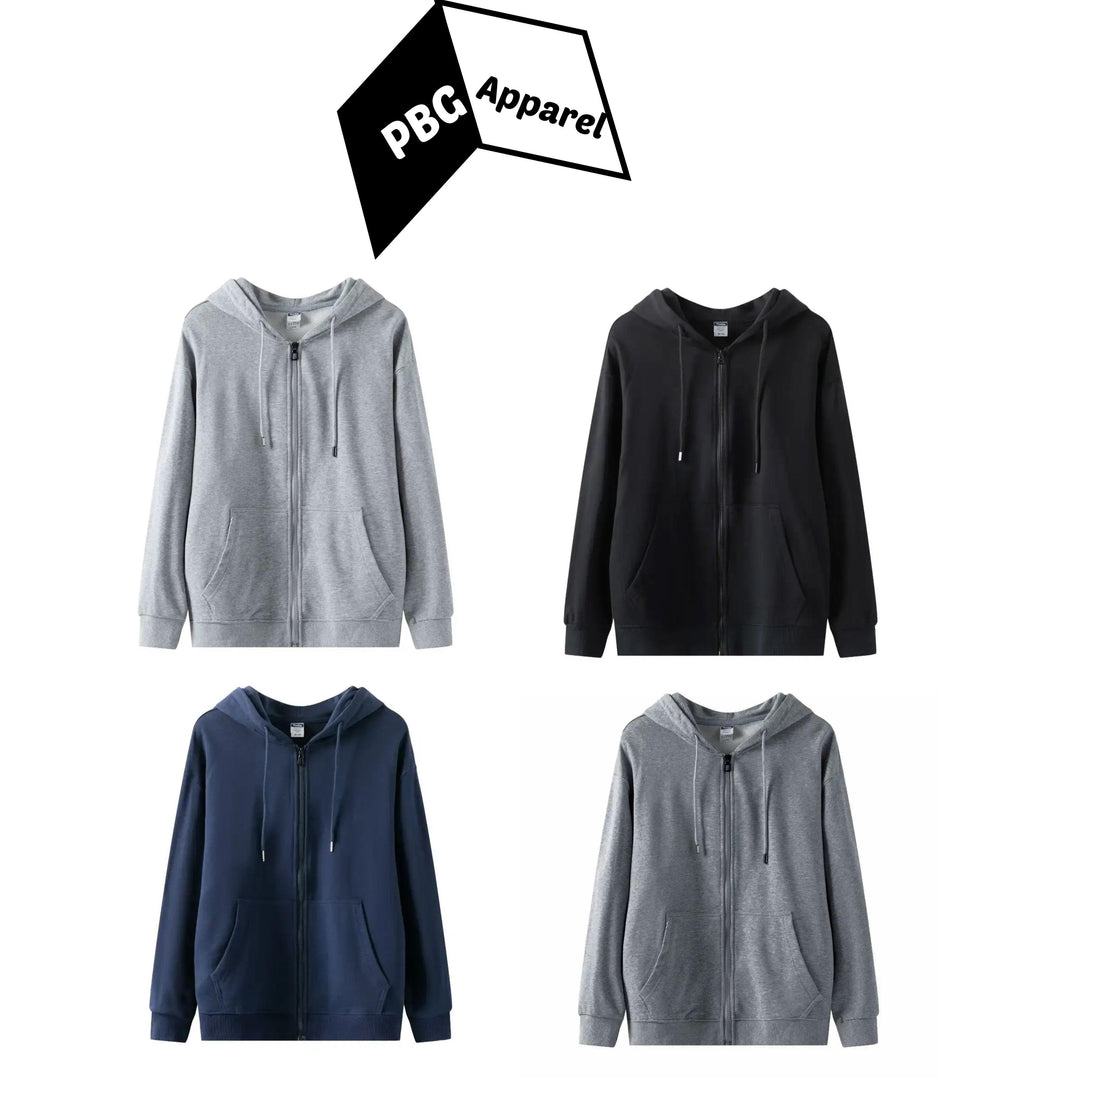 PBG Zip Up Hoodie Sweatshirts 2 Pair Assorted Big Pockets S-XL - PremiumBrandGoods